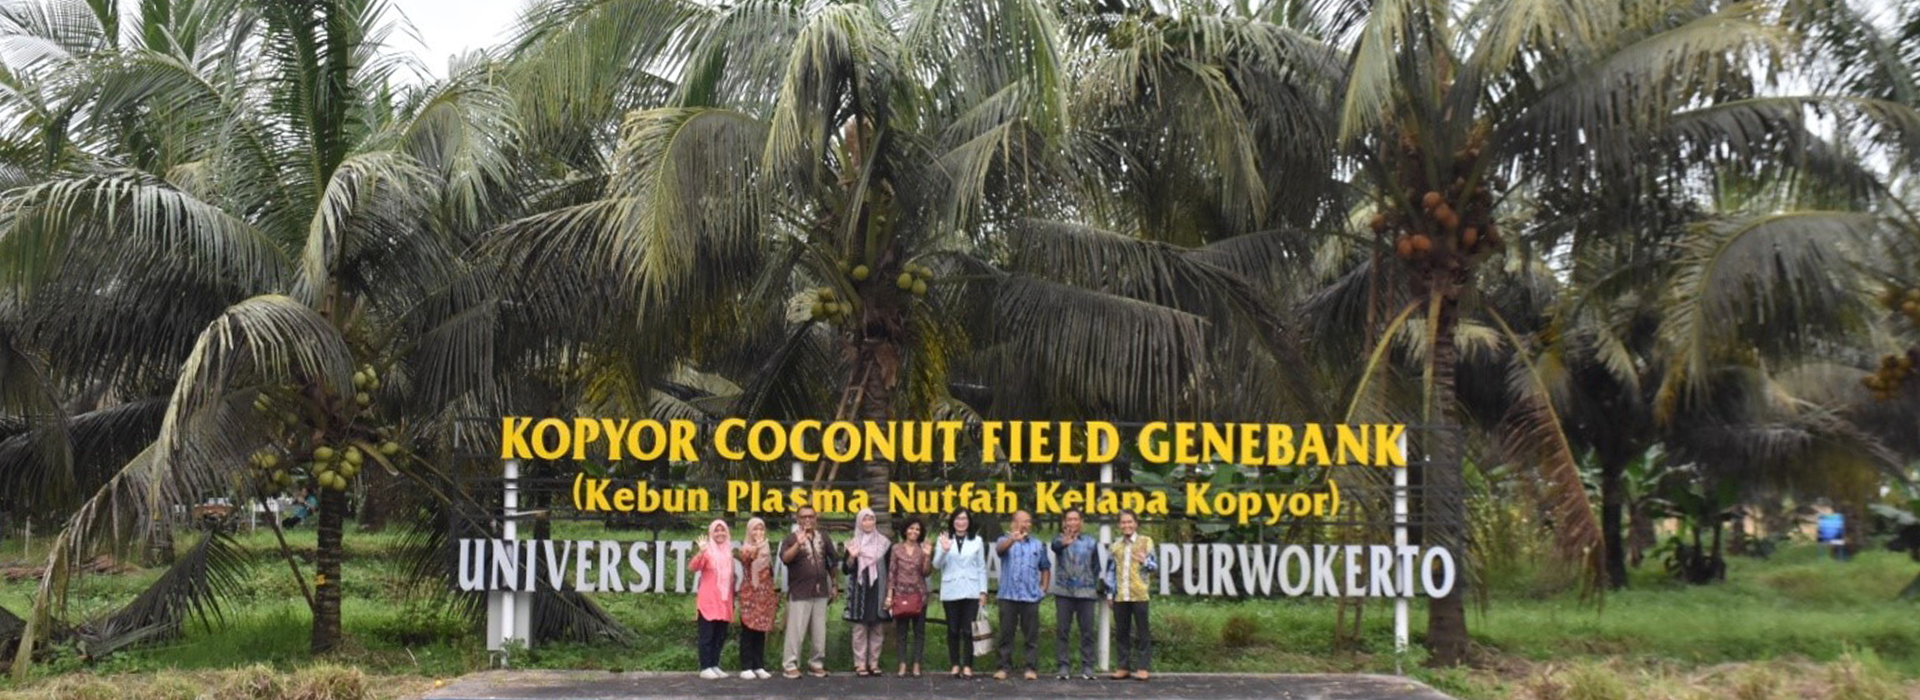 kopyor-coconut-genebank-a-treasure-of-university-of-muhammadiyah-purwokerto20211115144207.jpg